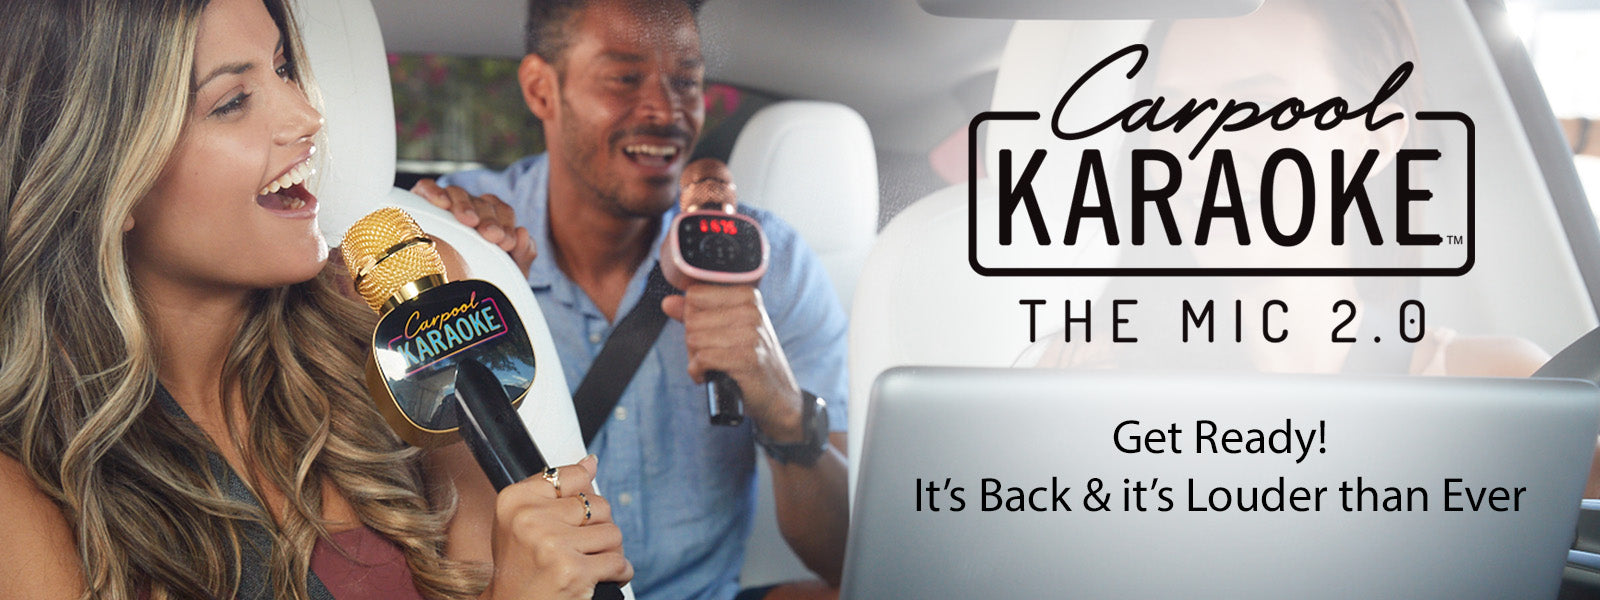 Karaoke de carpool